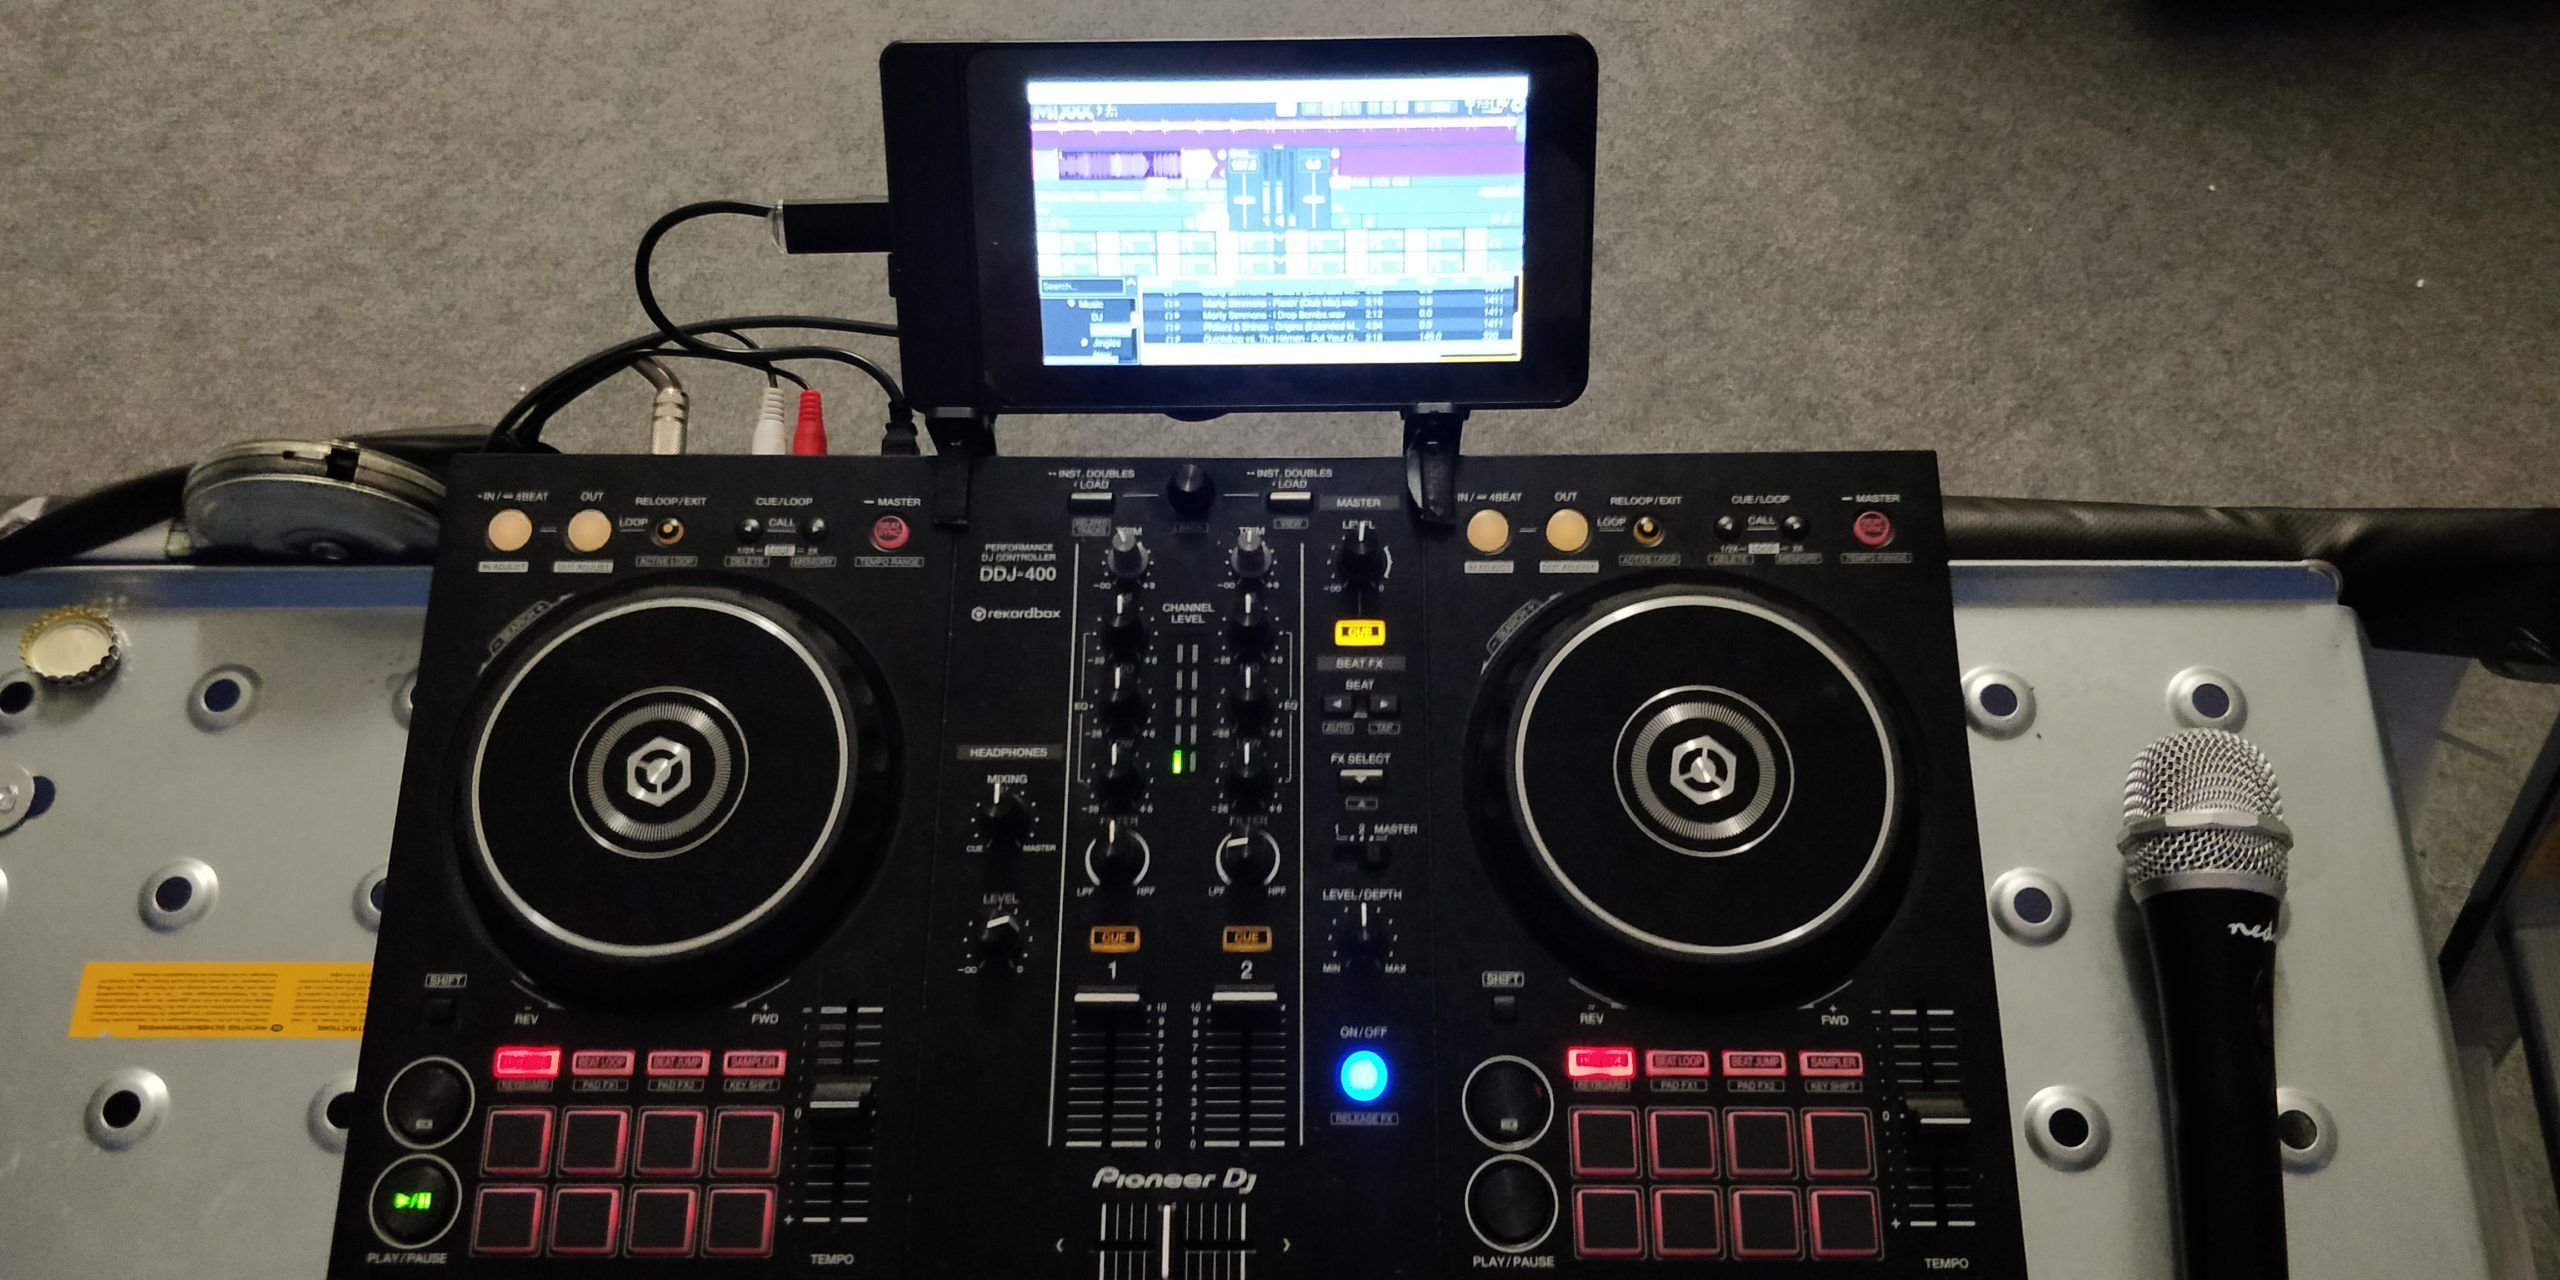 Building a standalone DDJ-400 with a Raspberry Pi and Mixxx - DJ